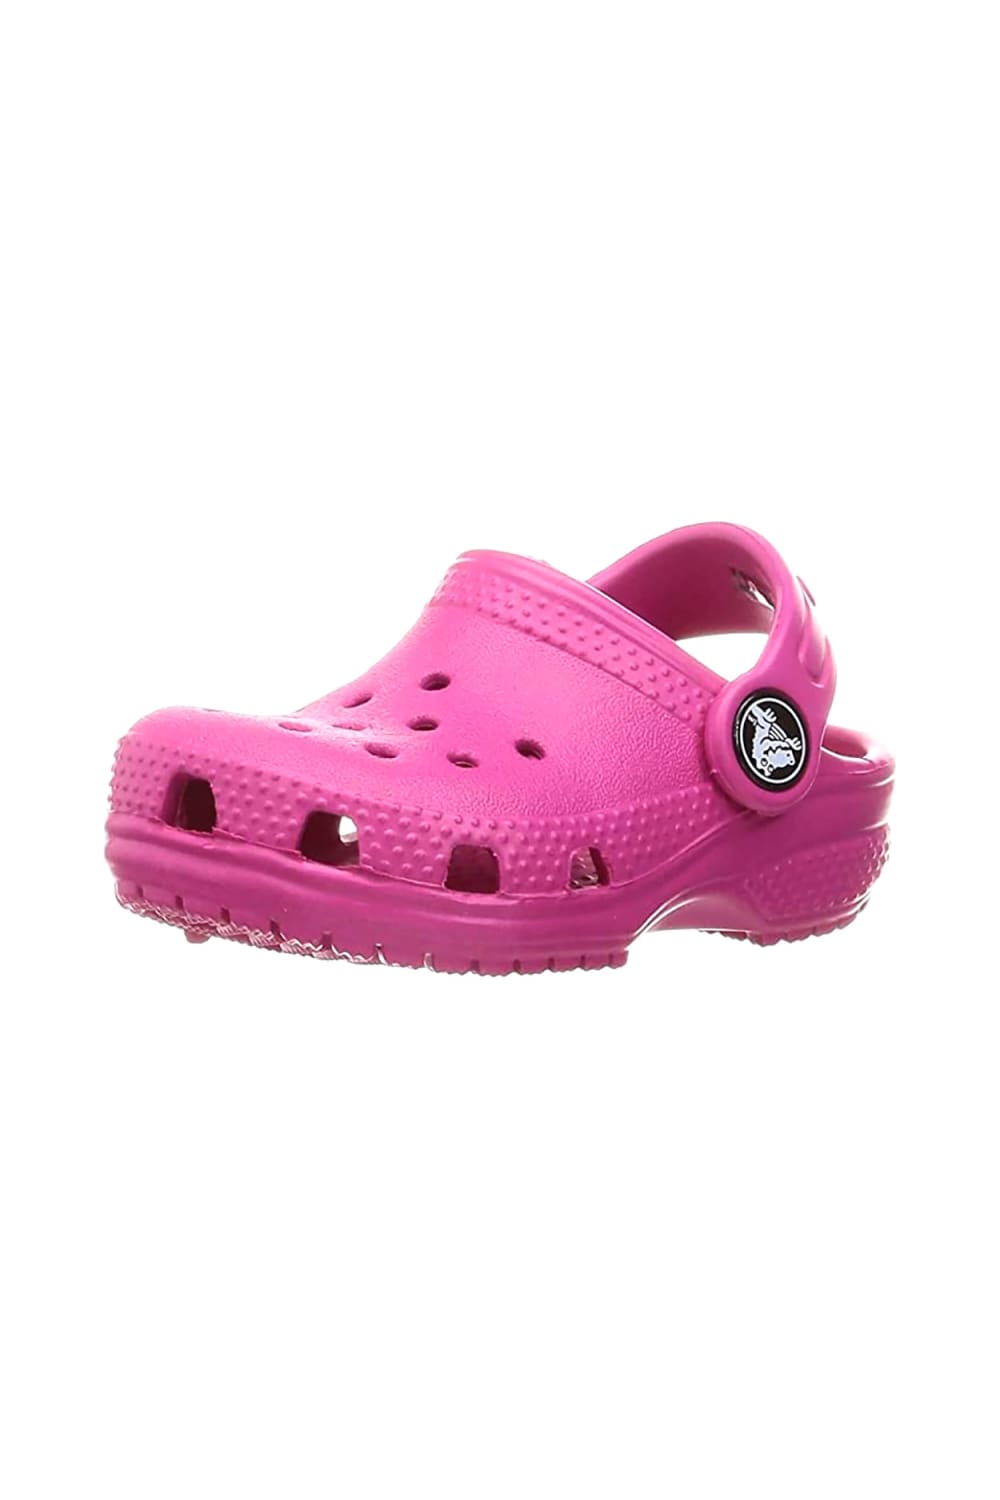 Crocs Childrens/Kids Classic Glitter Slip On Clog (Pink)